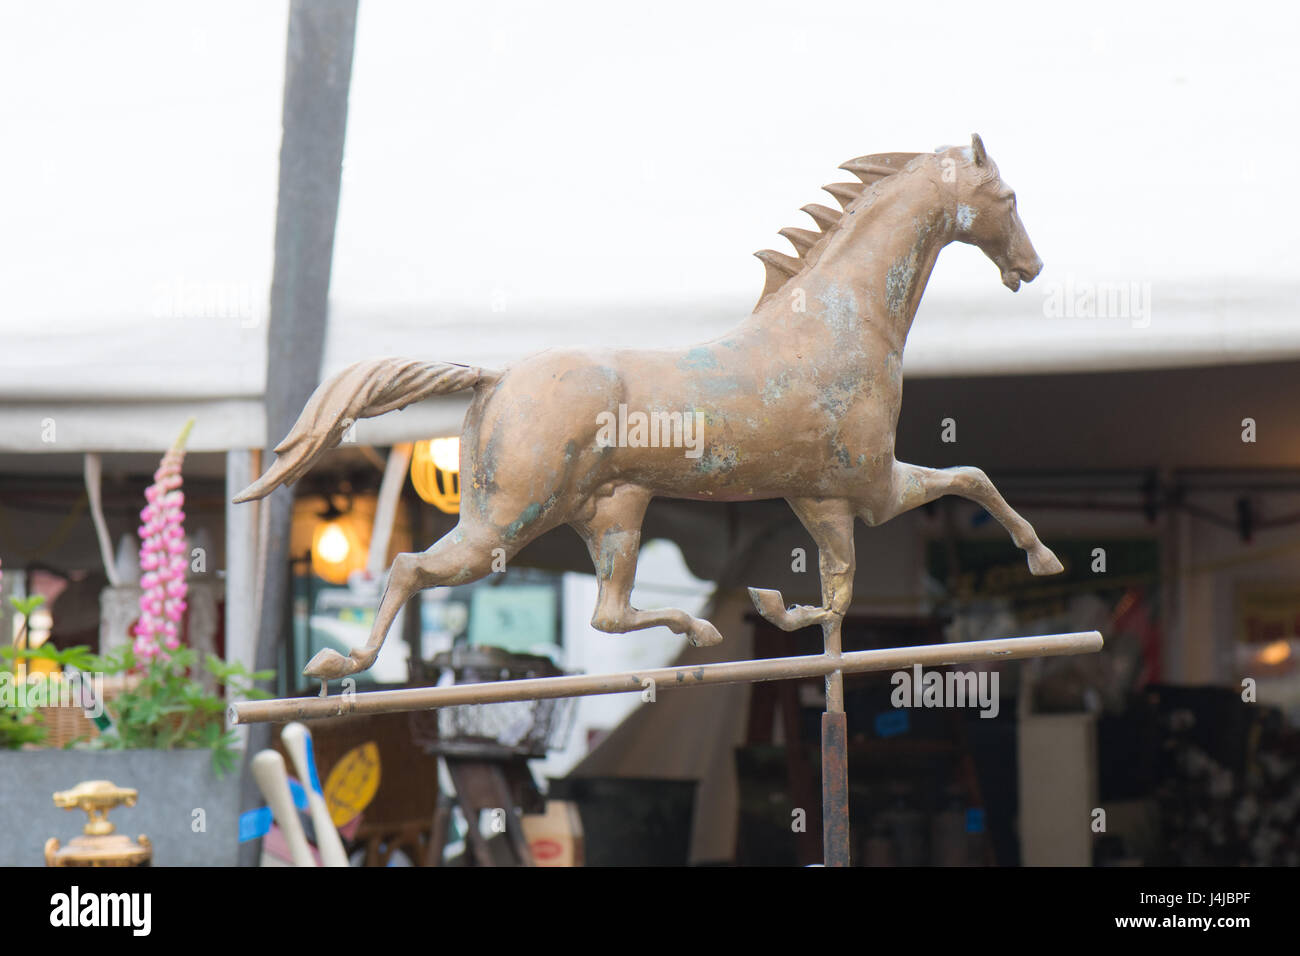 Running horse weathervane enlivens flea market wares. Stock Photo